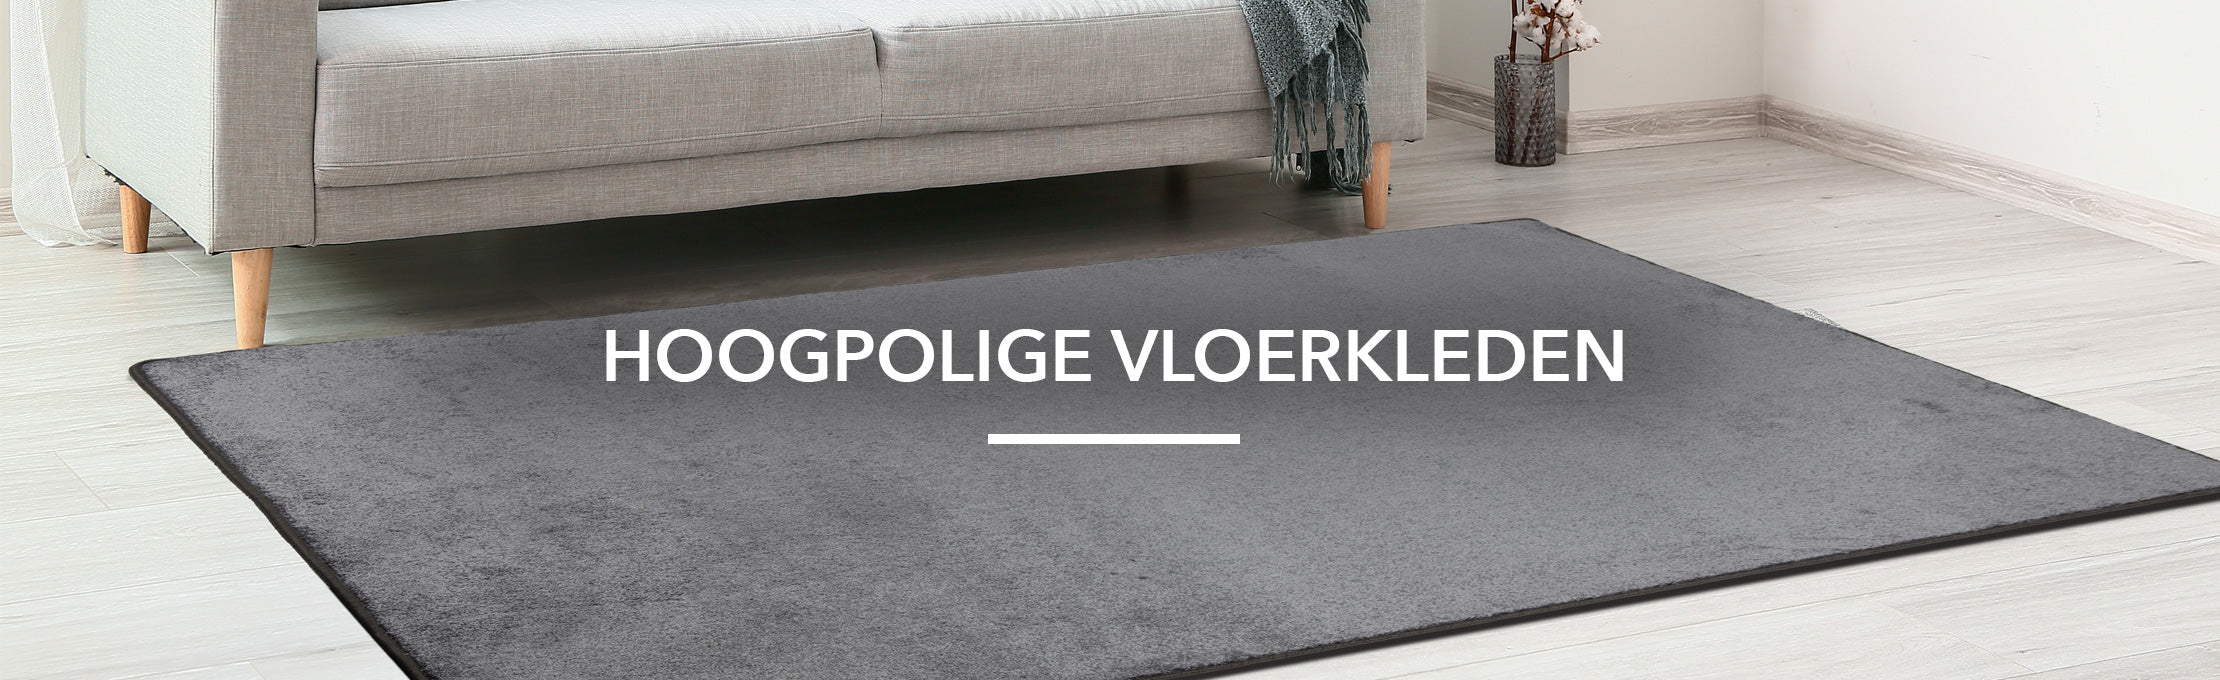 Brein Kalmerend Ciro Hoogpolige vloerkleden — NL Floordirekt